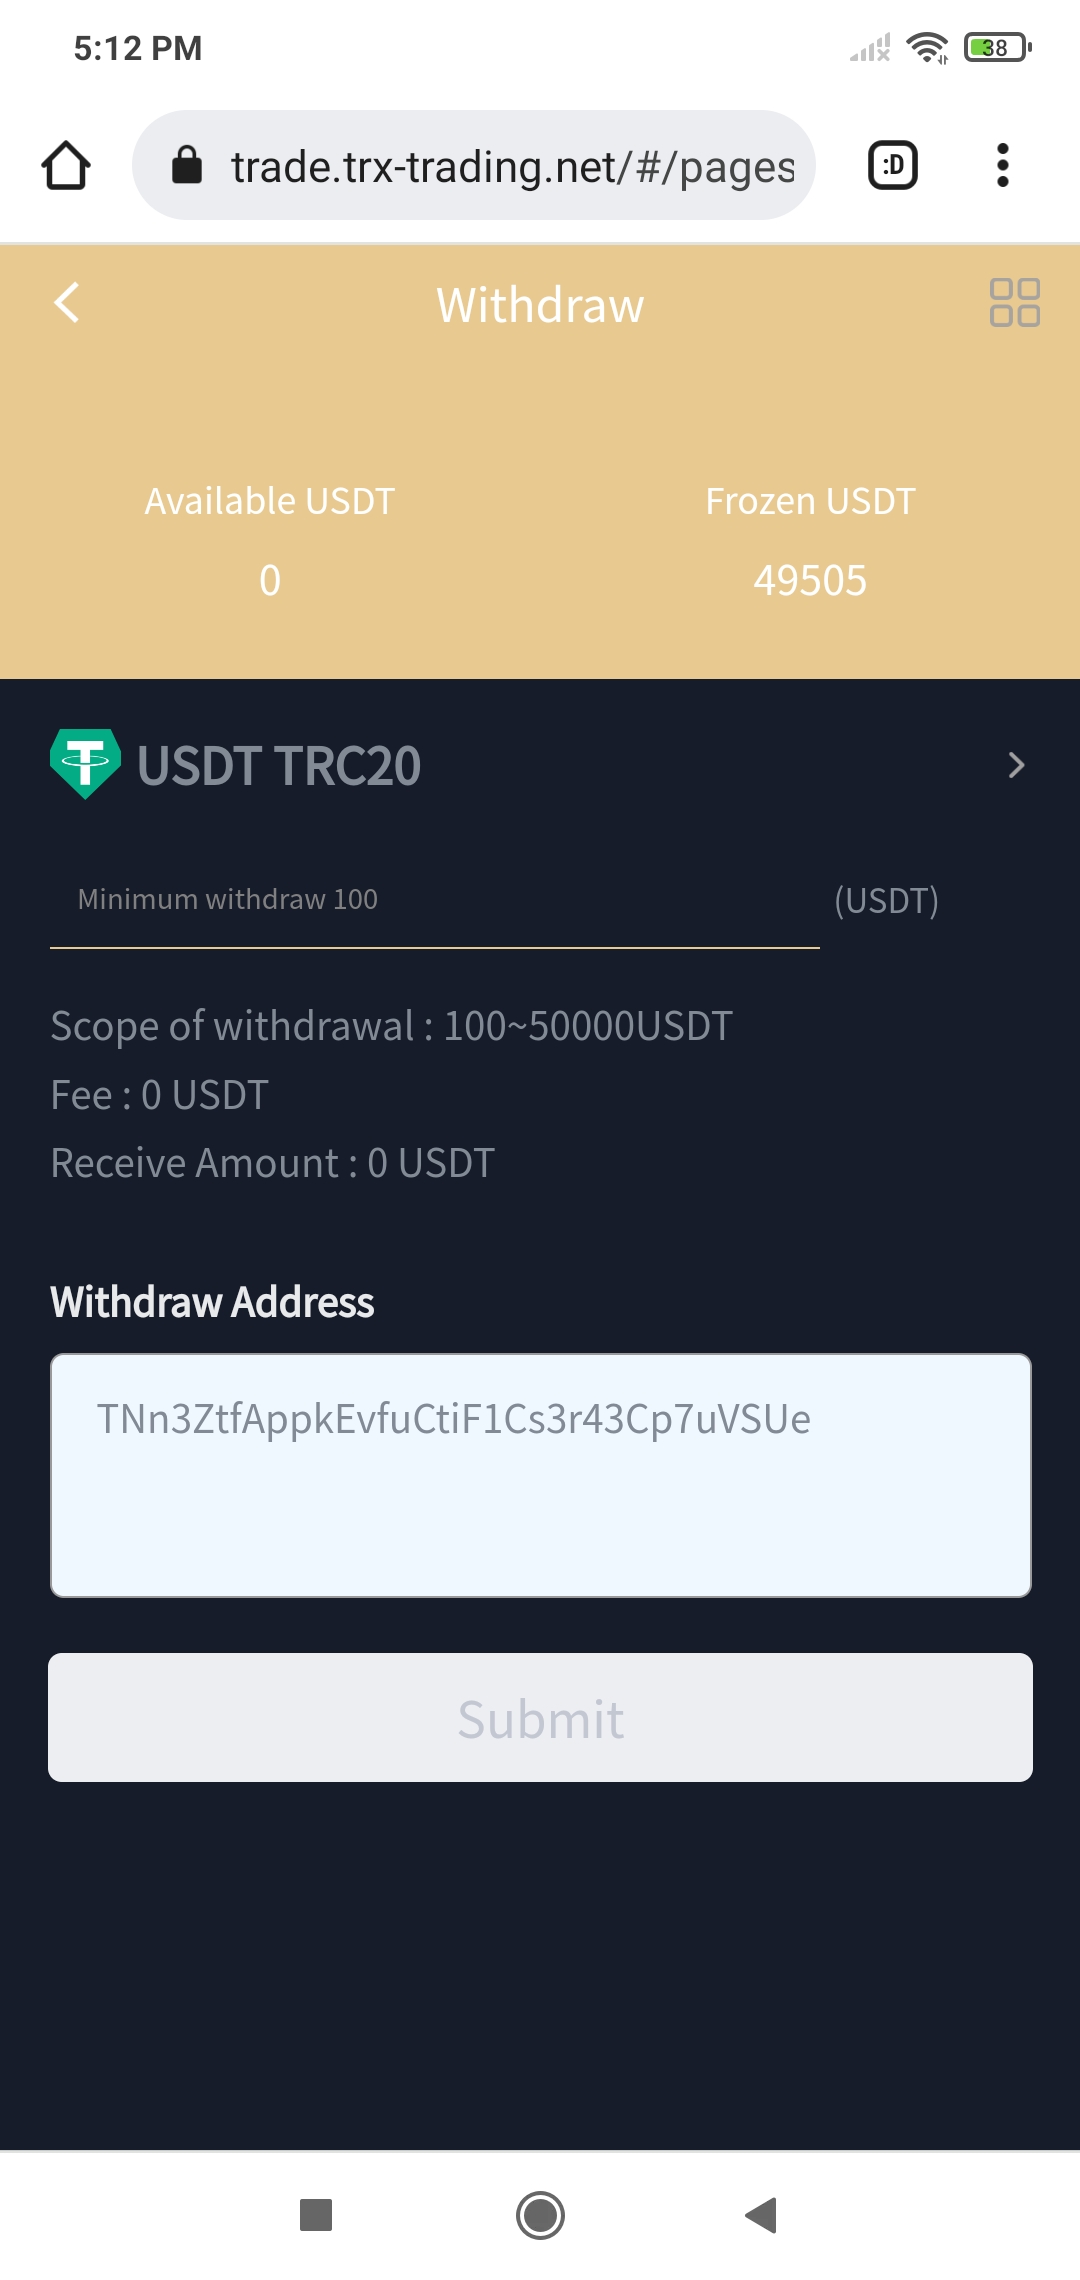 Trade.trx-trading.net complaint Freezed Btc trading account